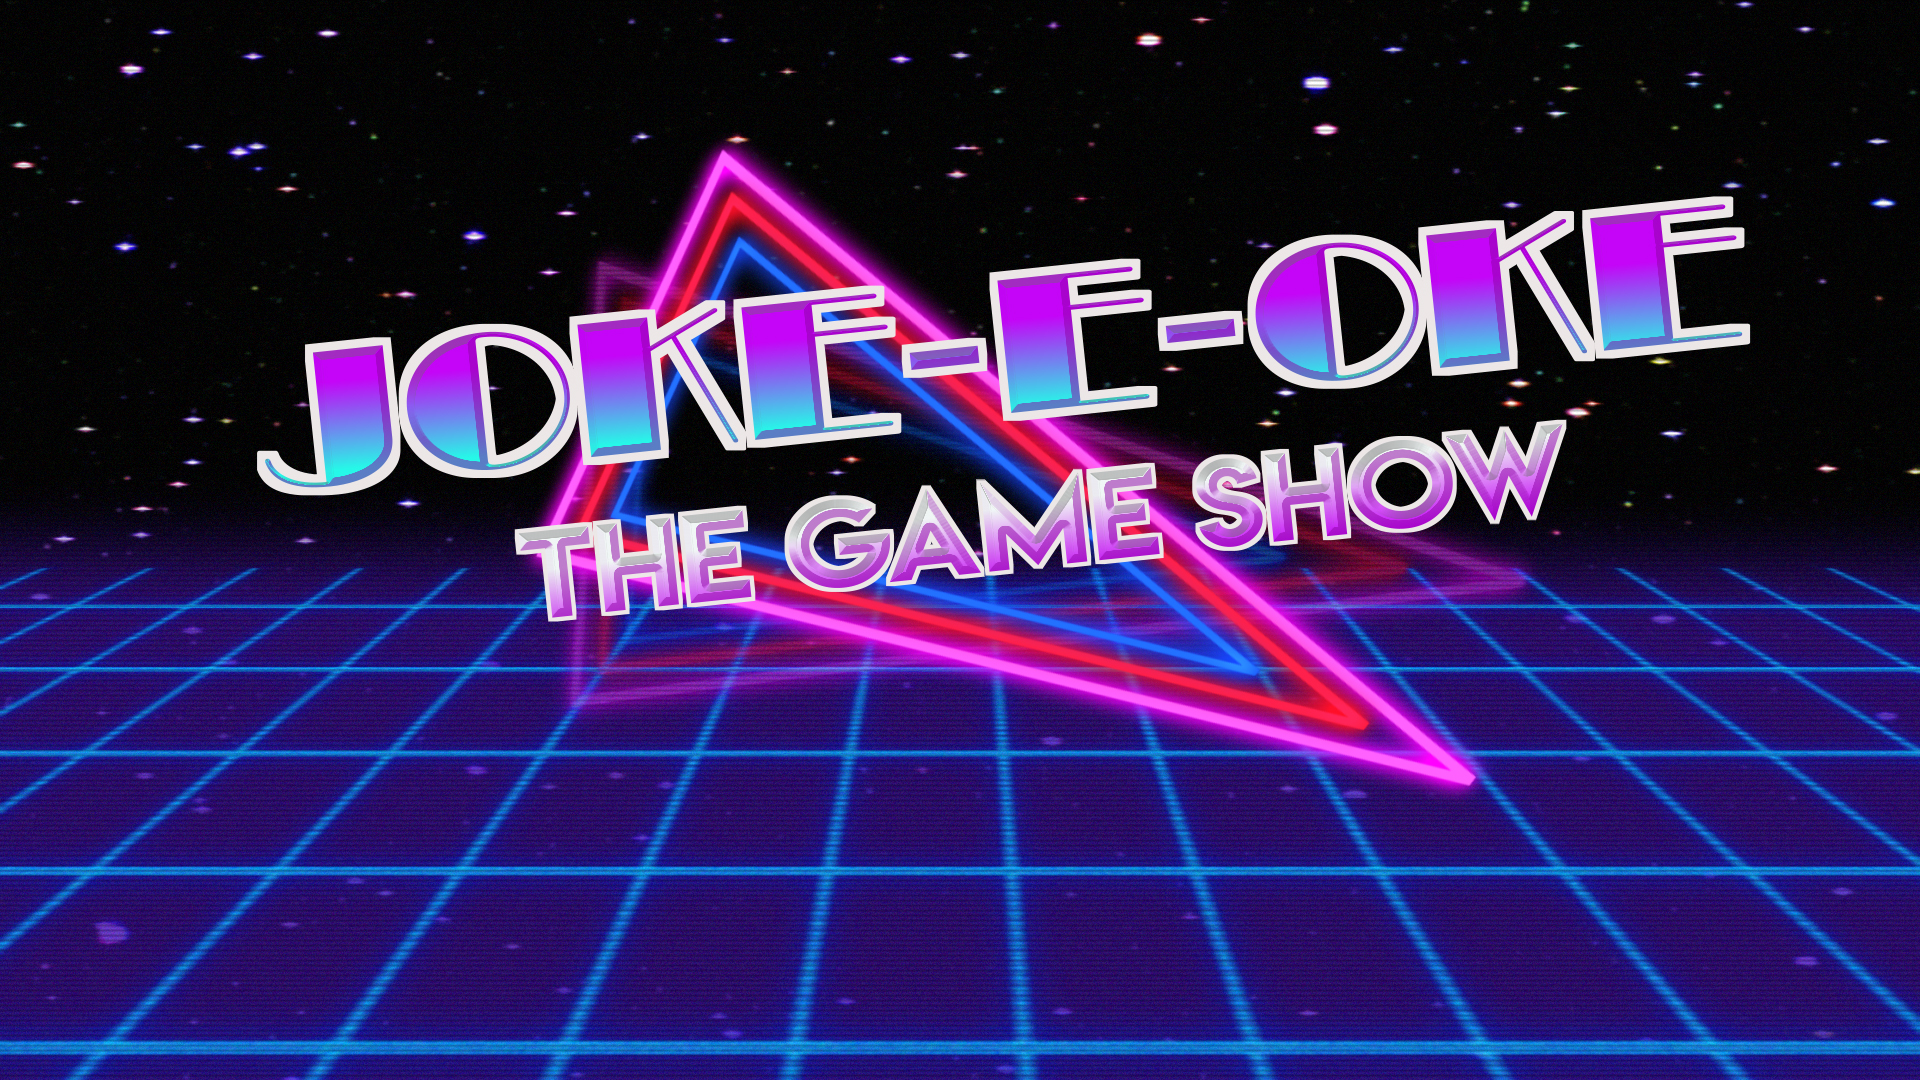 Joke-e-oke-The Standup Karaoke Gameshow